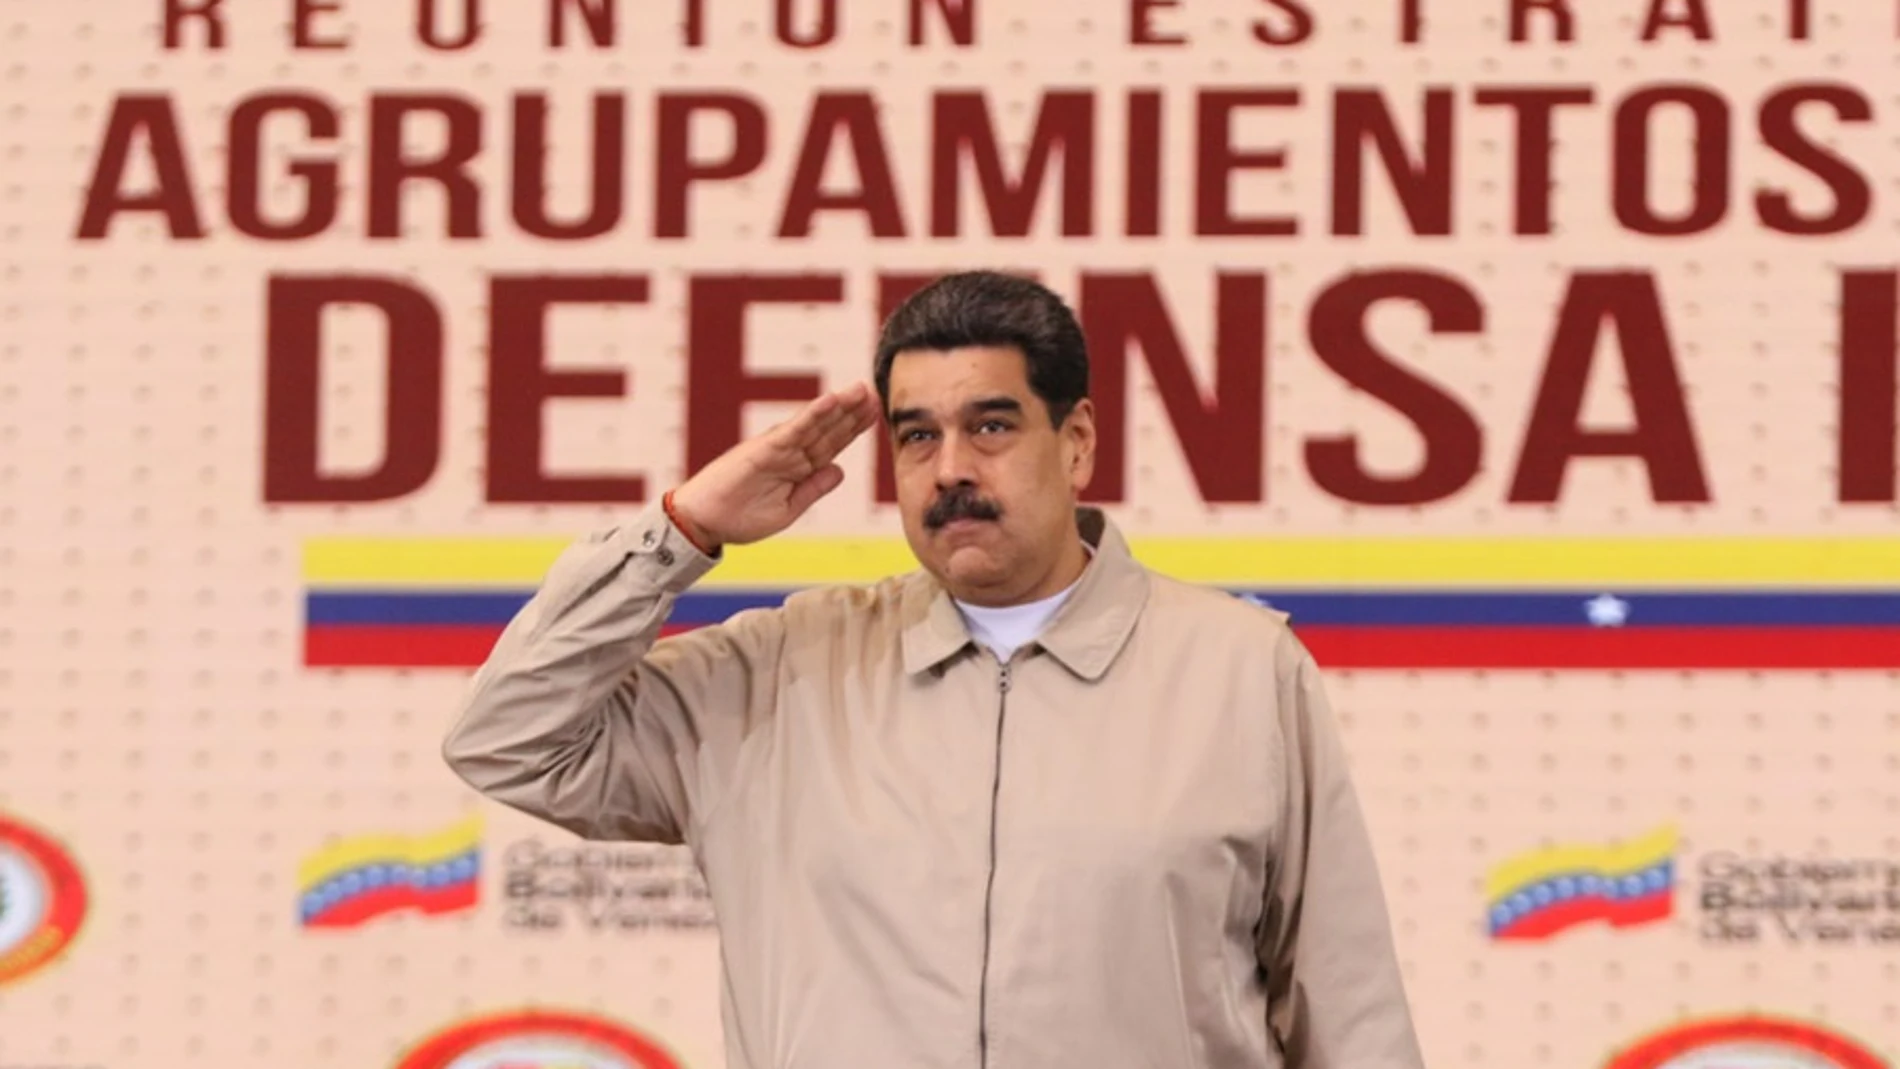 Venezuela.- La Iglesia venezolana critica el "régimen totalitario e inhumano" de Maduro